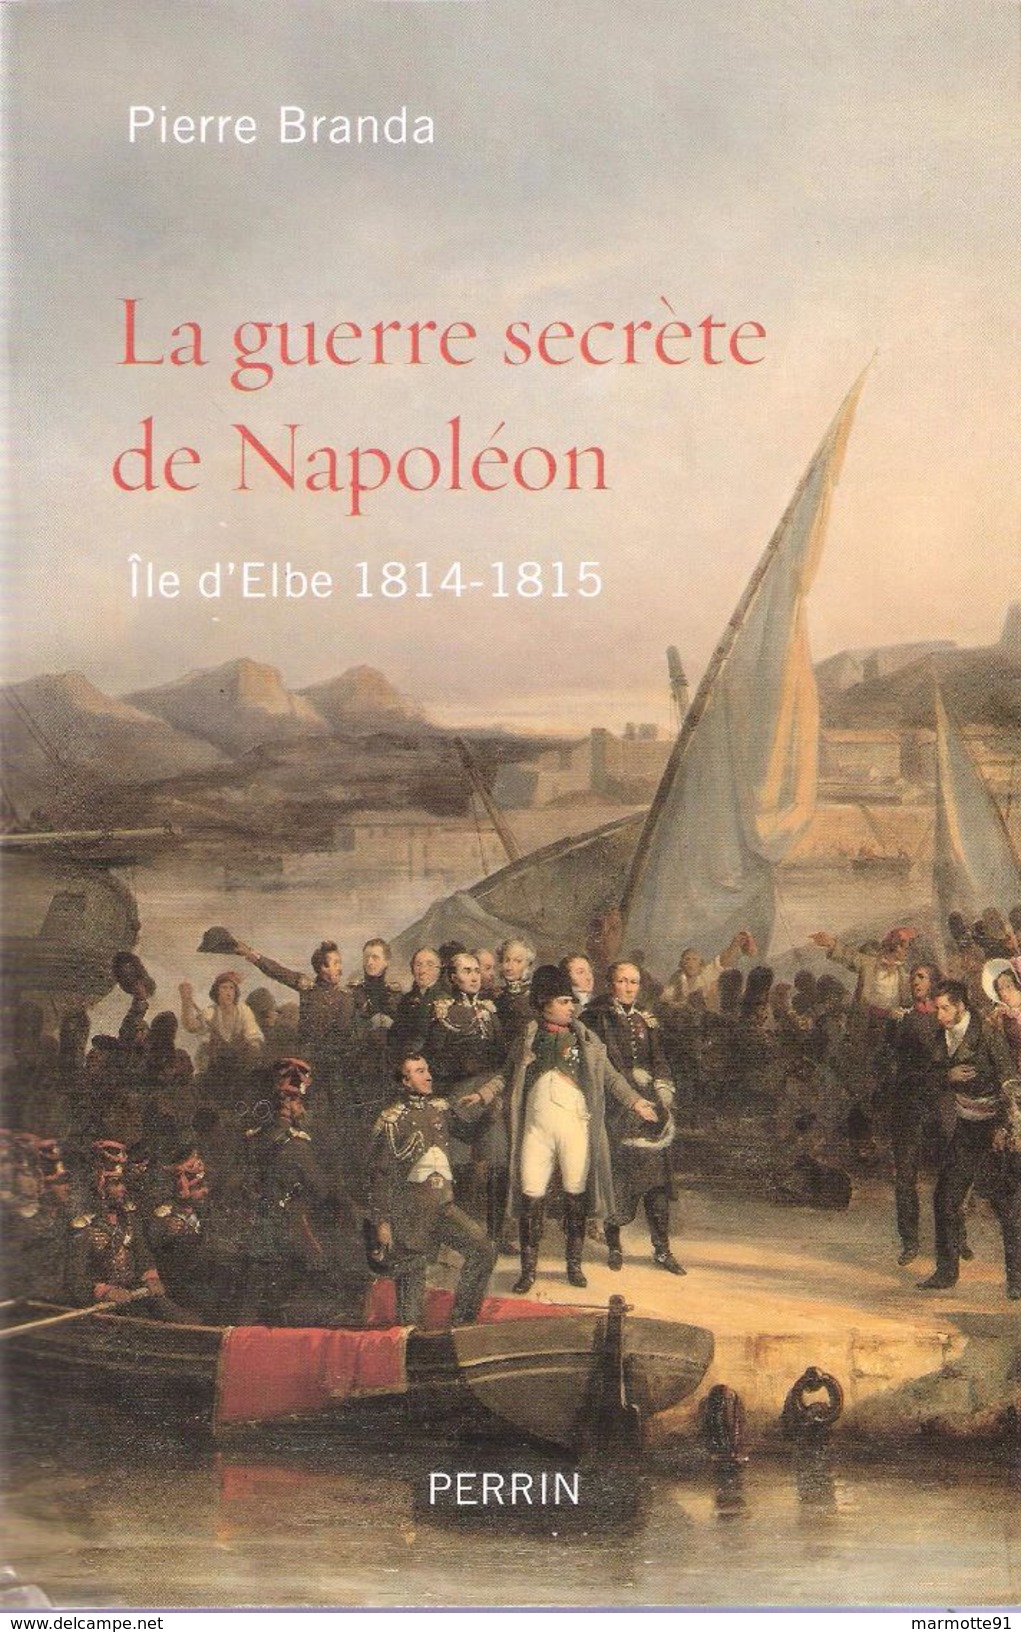 GUERRE SECRETE DE NAPOLEON ILE D ELBE 1814 1815 EMPEREUR BONAPARTE EMPIRE - Histoire